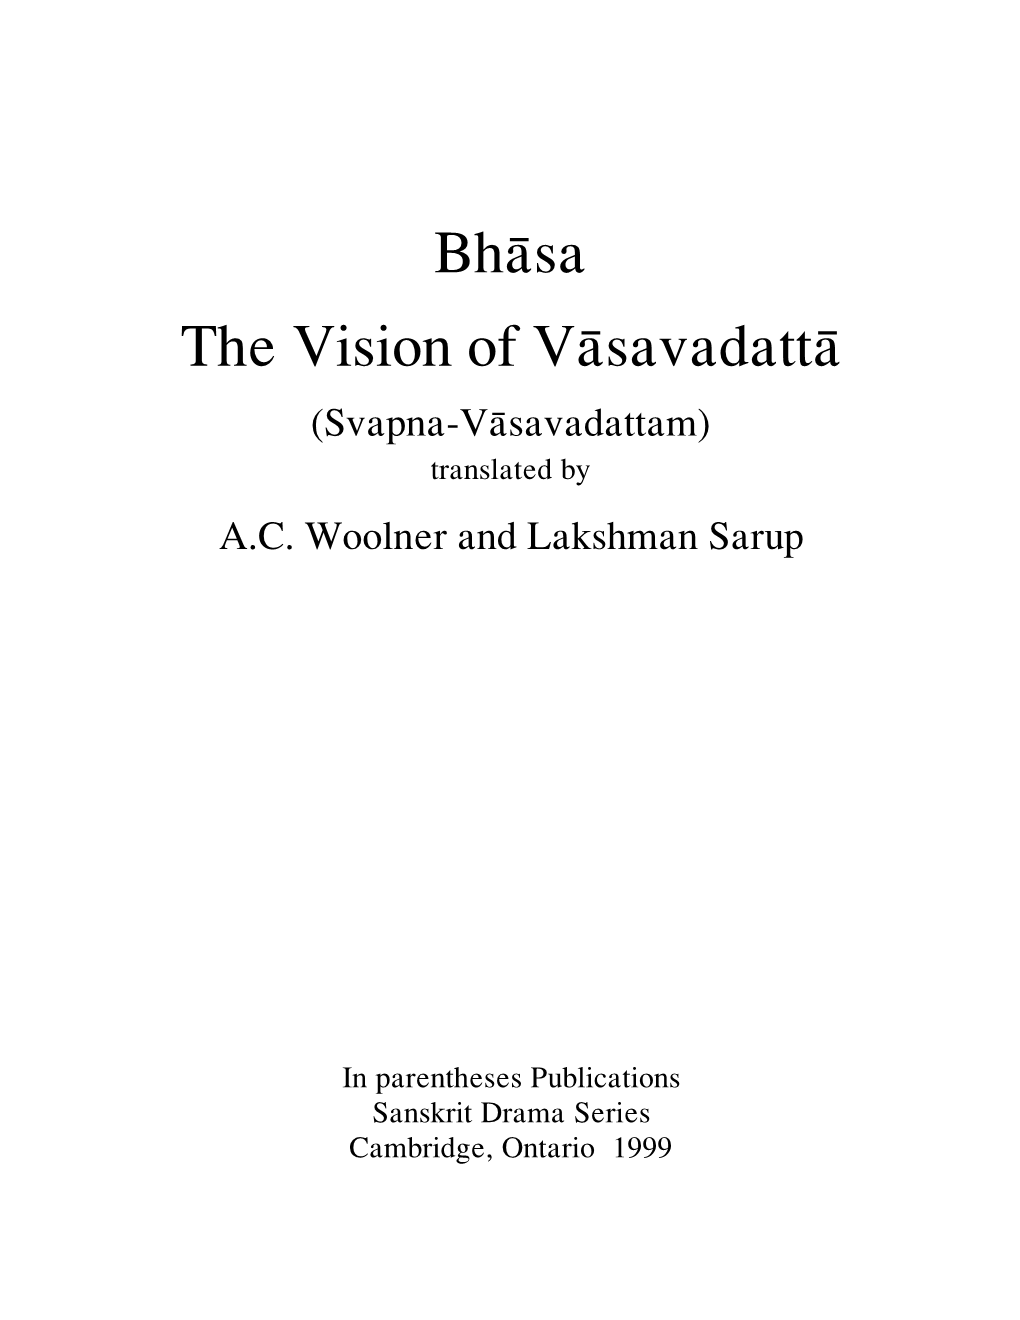 The Vision of Vasavadatta